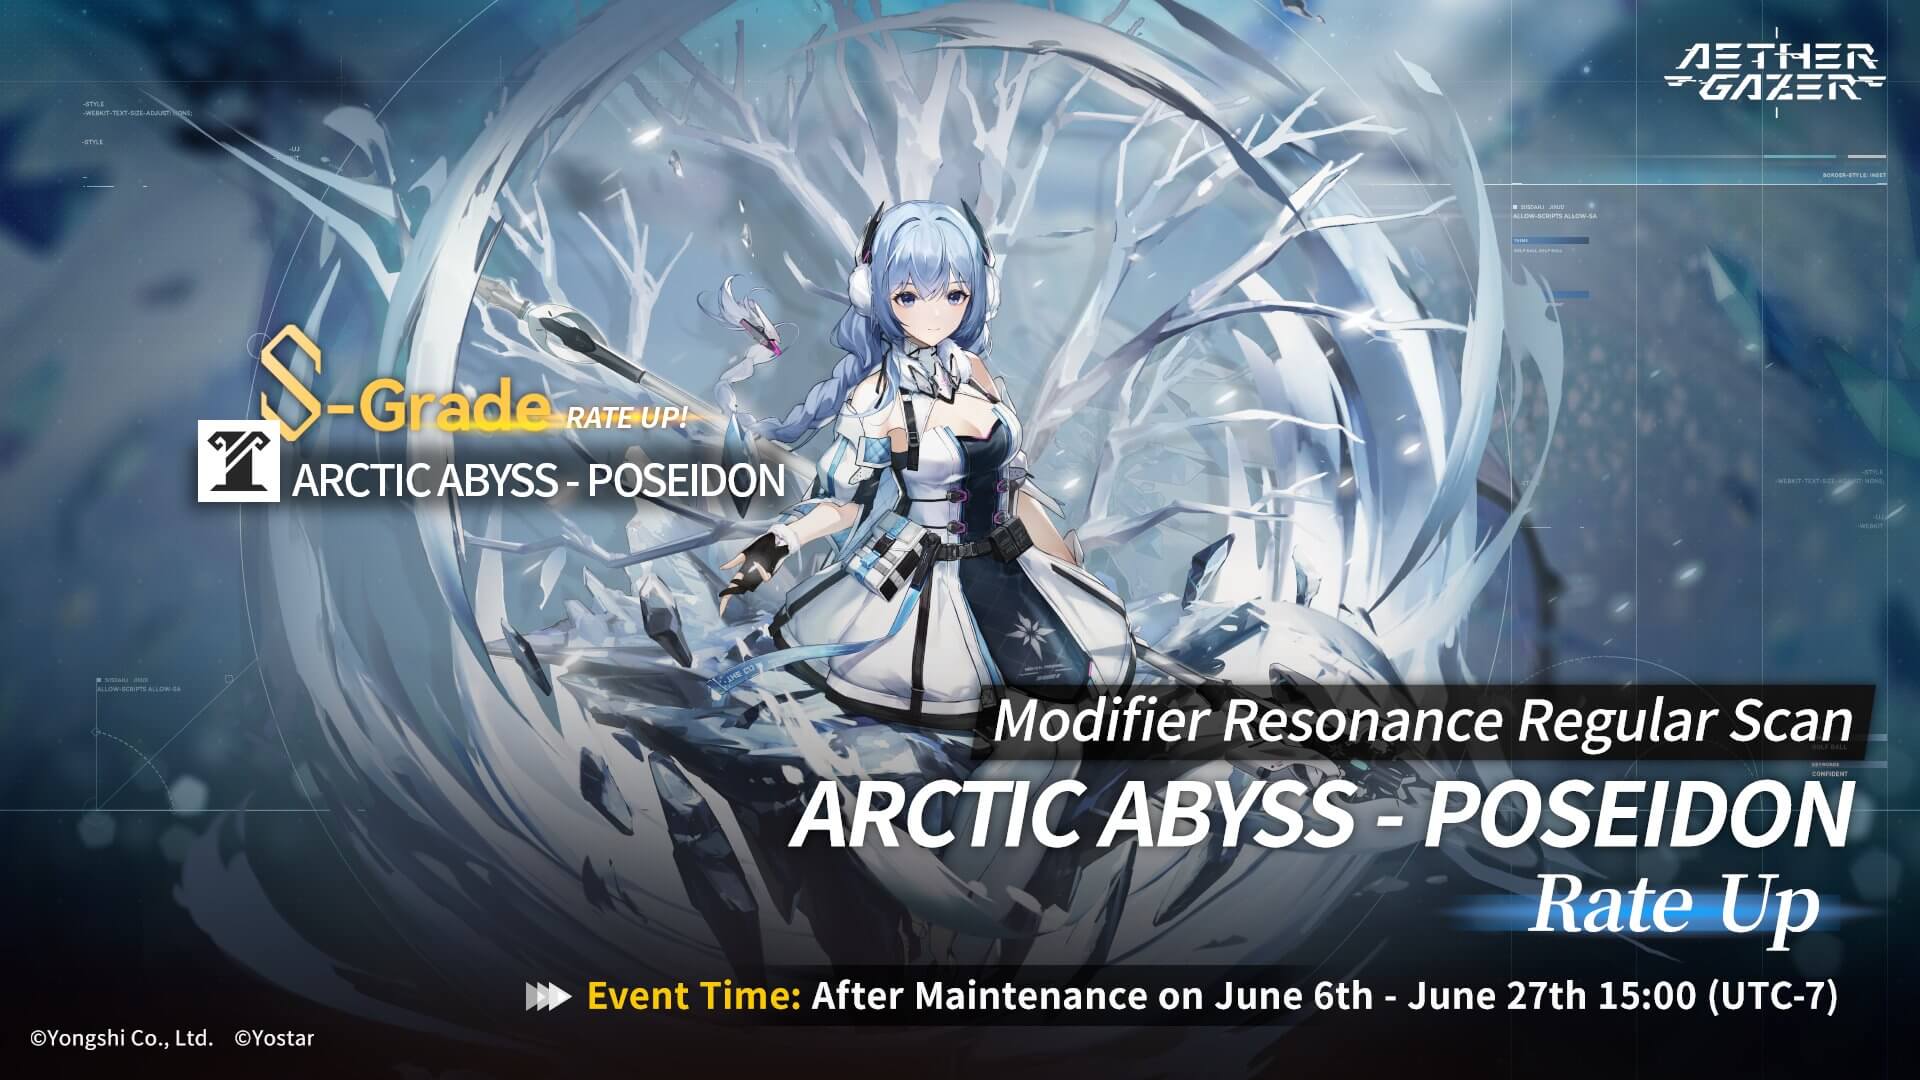 Arctic Abyss Poseidon Regular Scan gacha banner